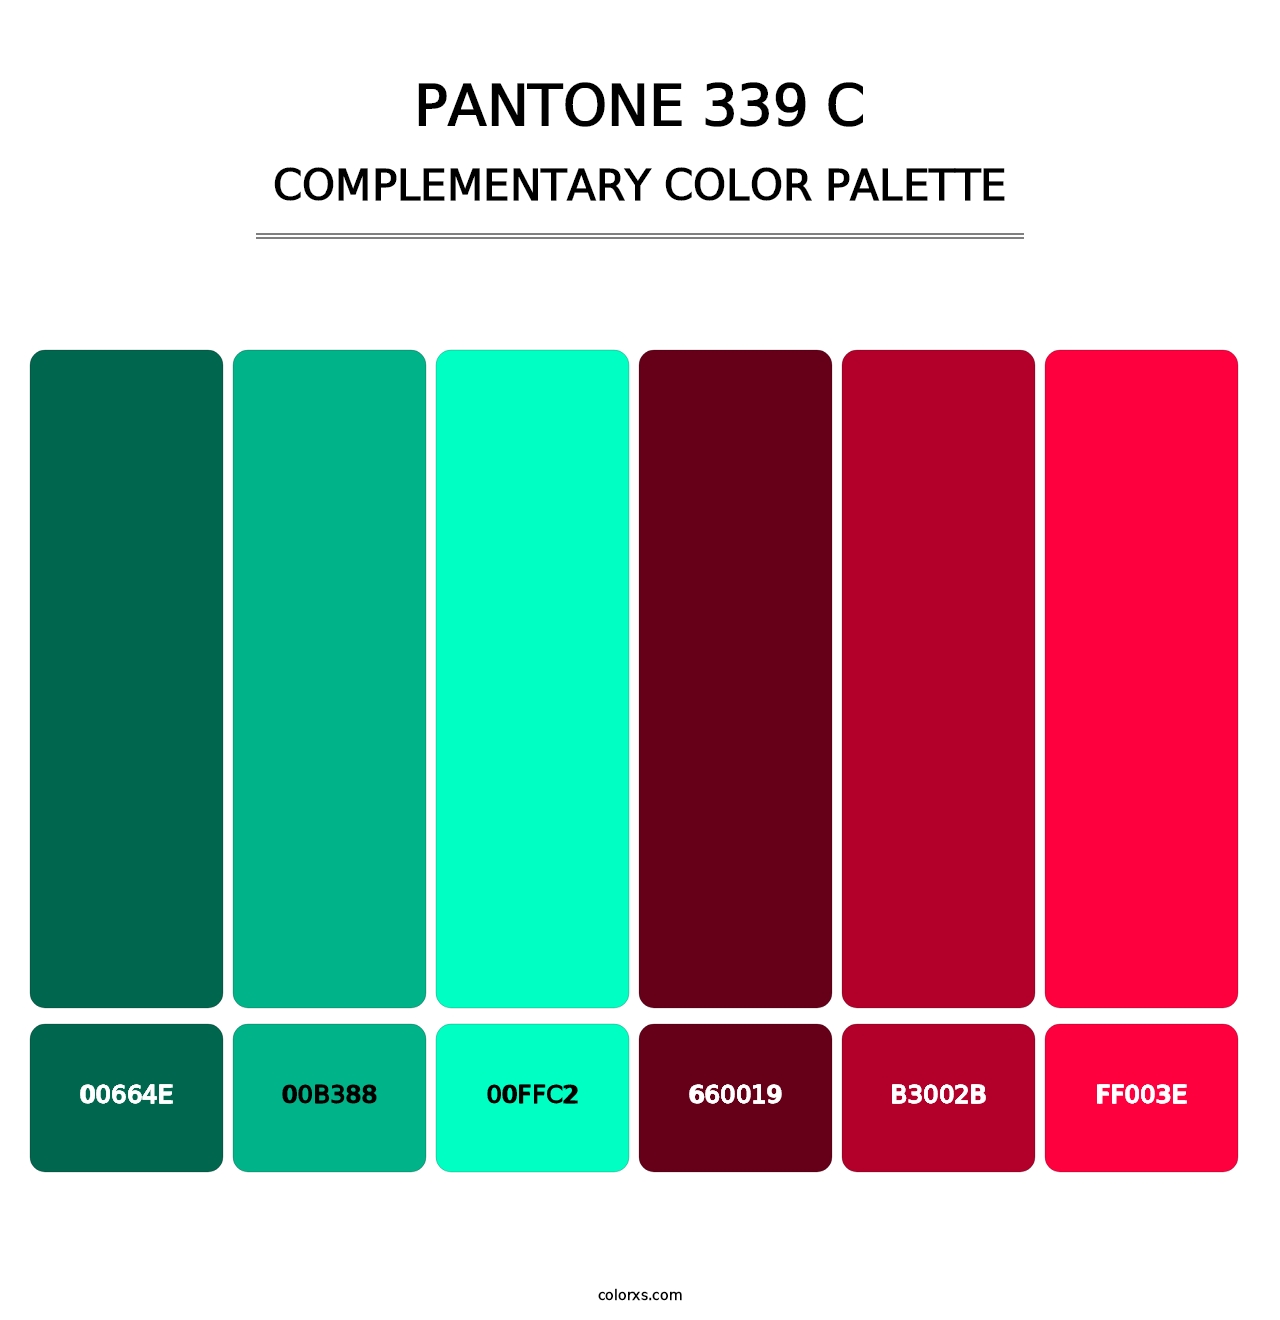 PANTONE 339 C - Complementary Color Palette